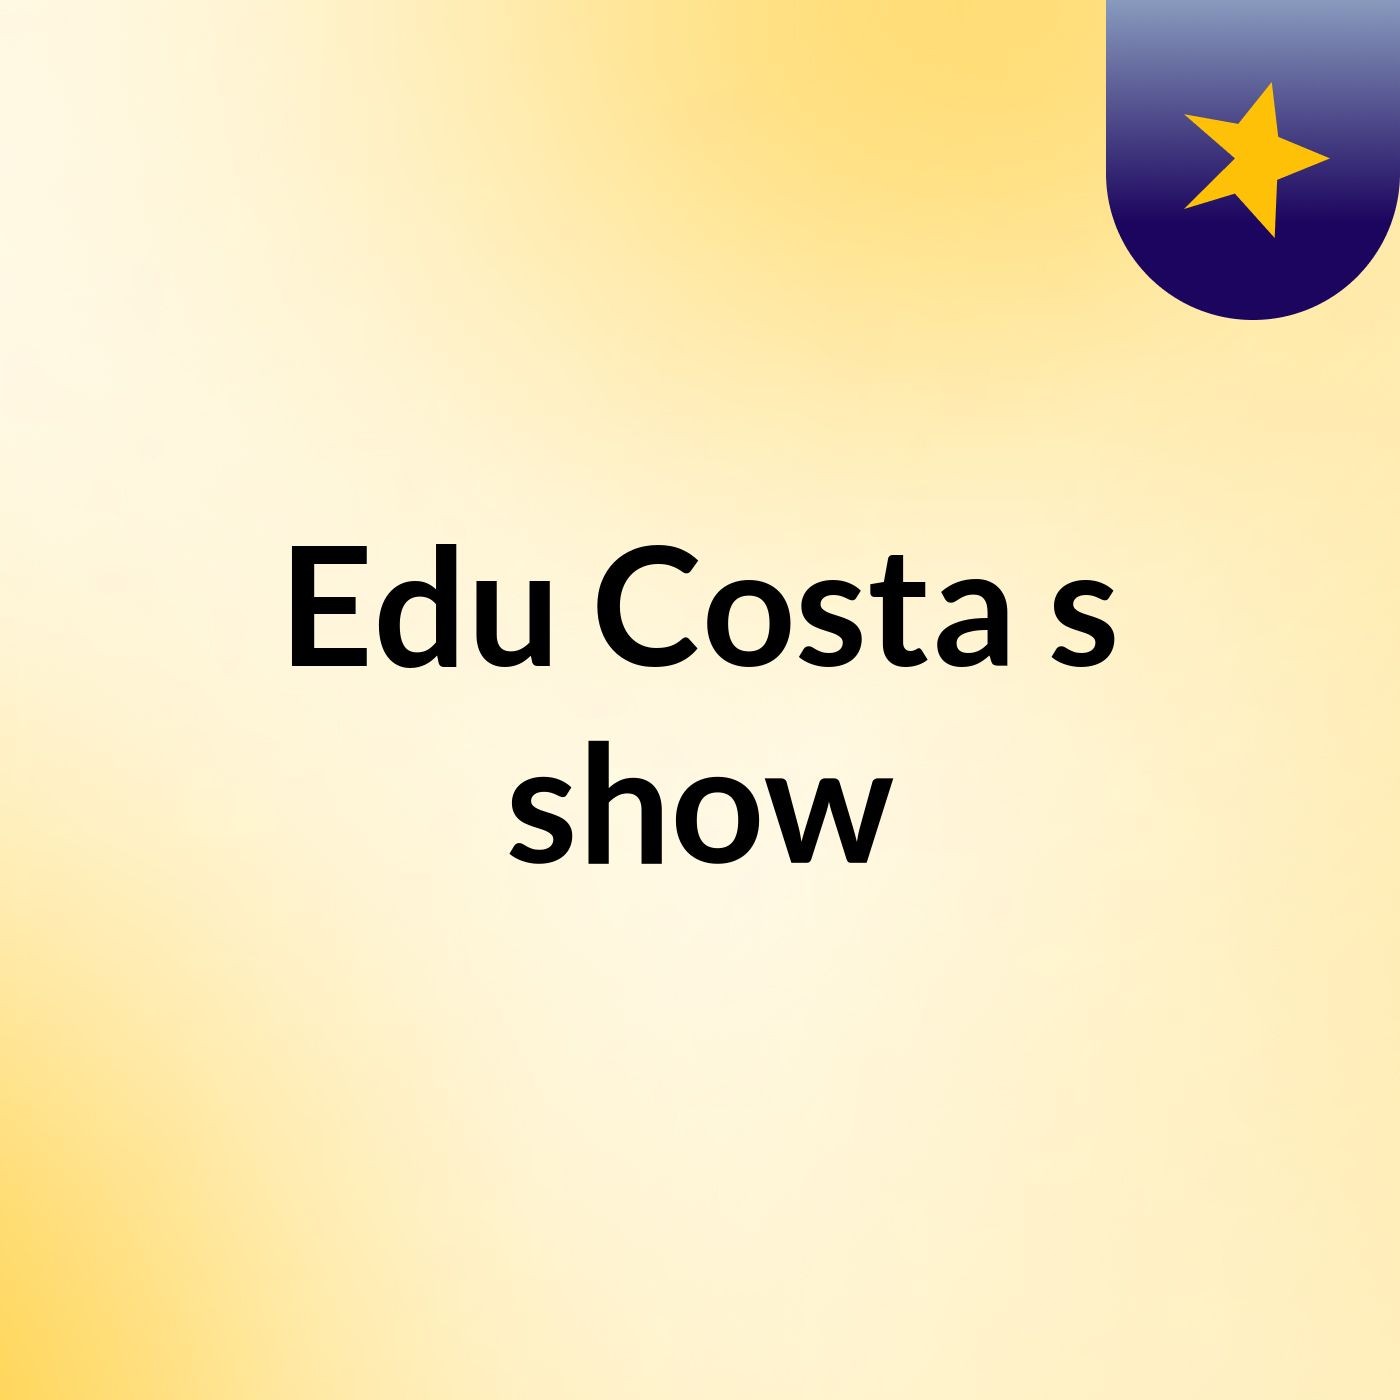 Edu Costa's show